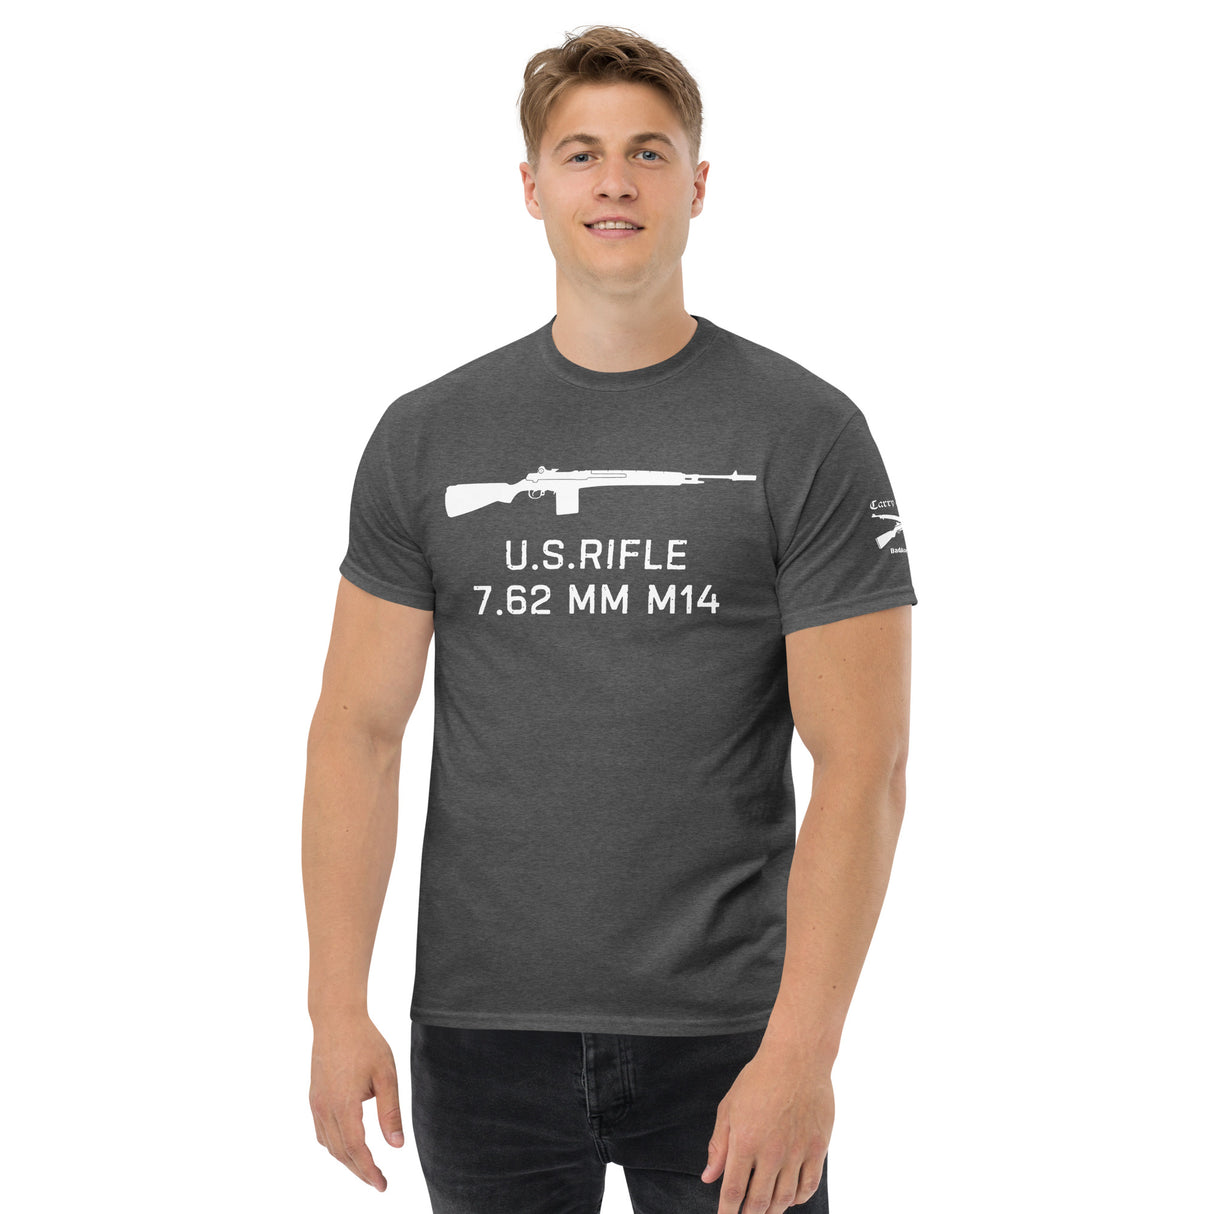 U.S. Rifle 7.62 MM M14 cotton T-shirt - light font